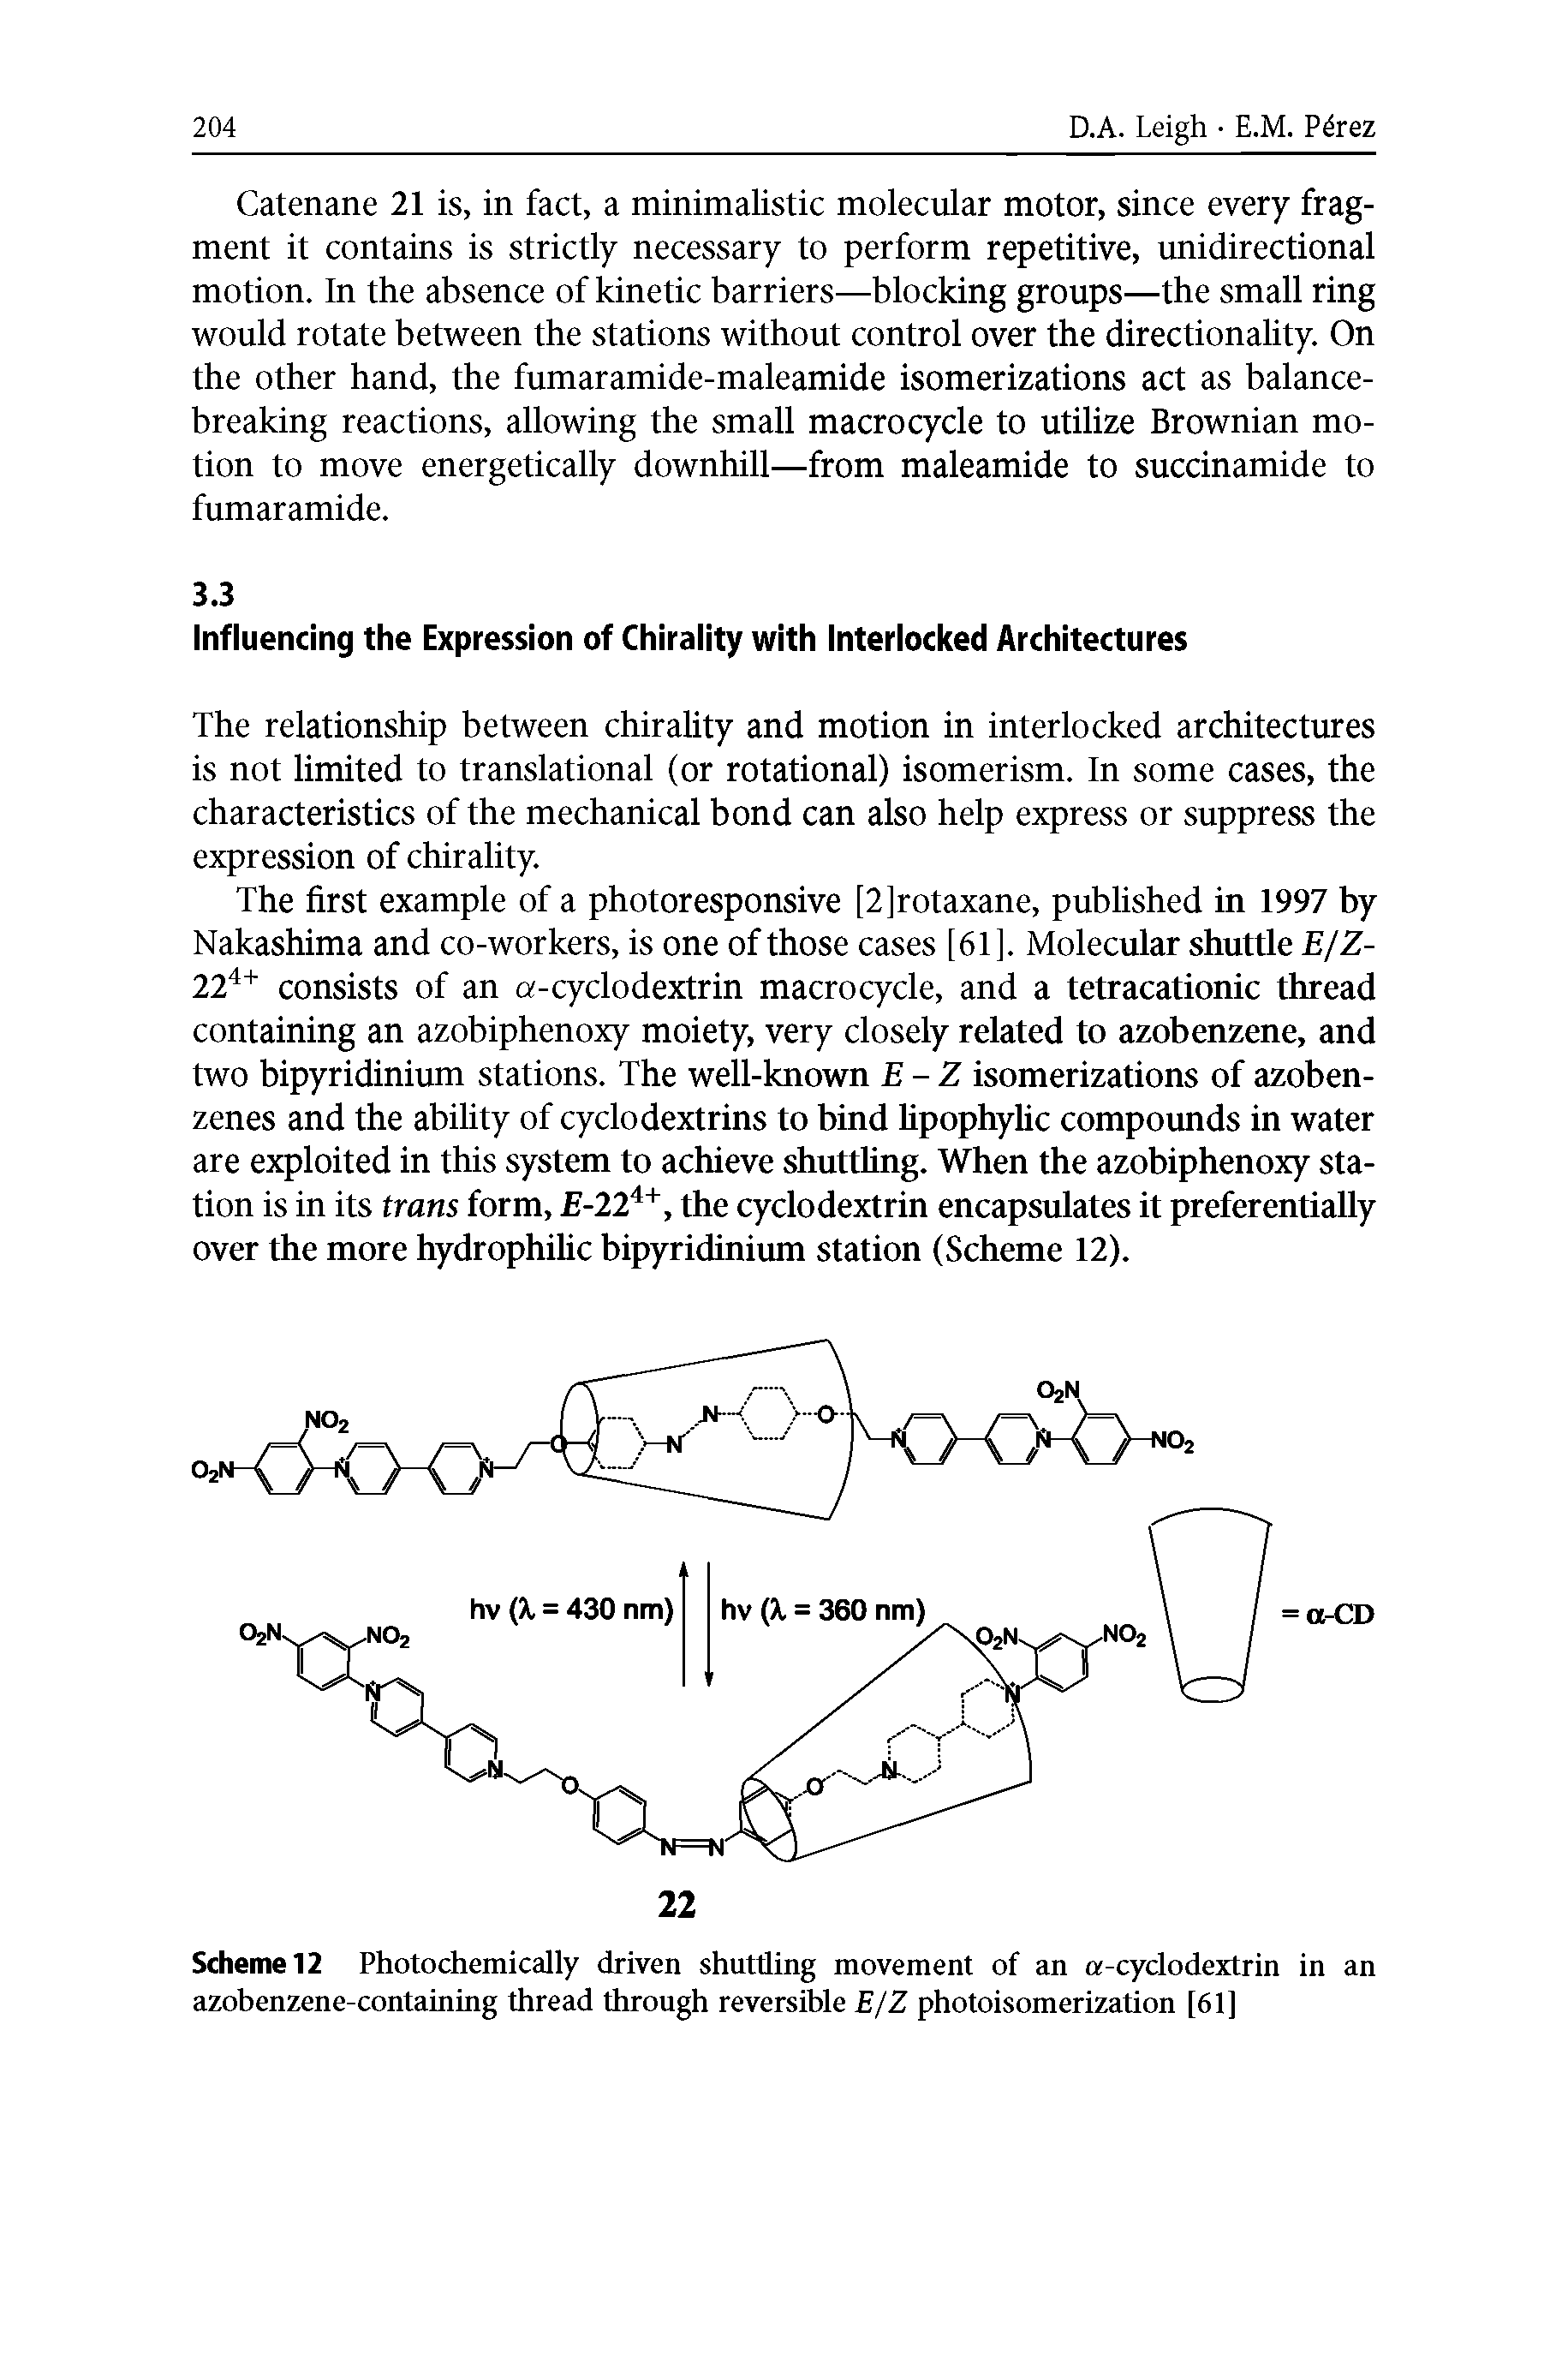 Scheme 12 Photochemically driven shuttling movement of an a-cyclodextrin in an azobenzene-containing thread through reversible E/Z photoisomerization [61]...